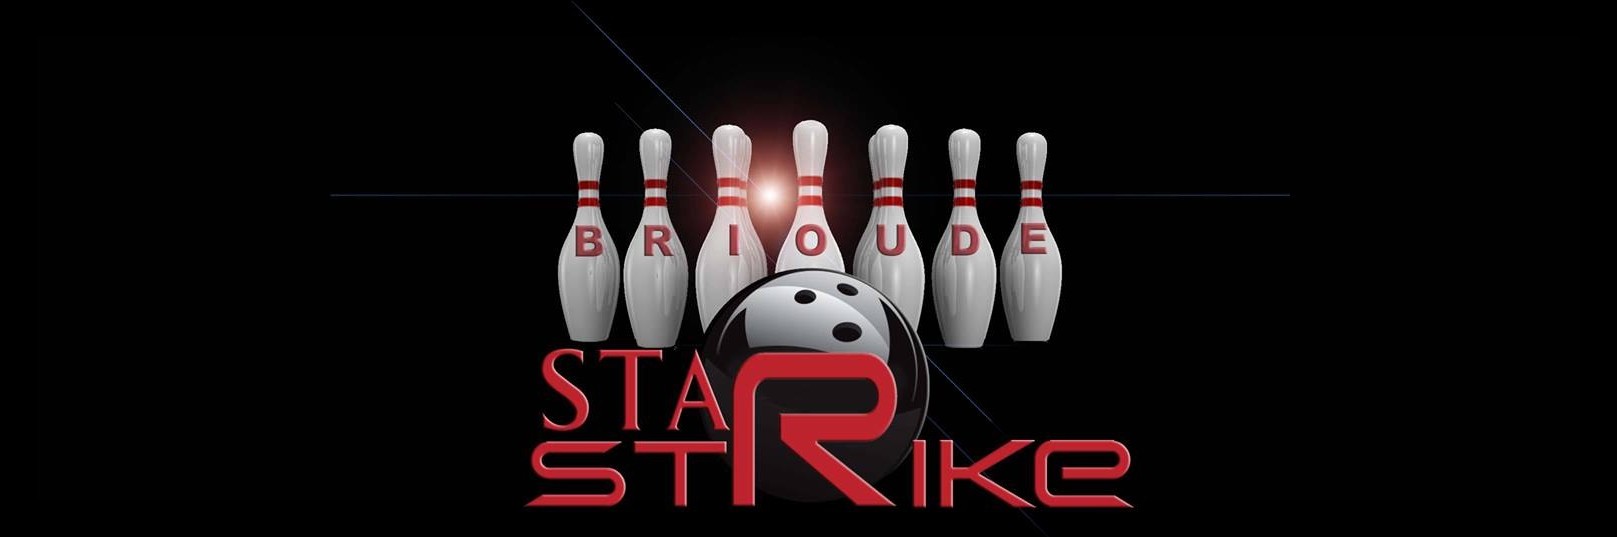 Bowling Le Star Strike à Brioude